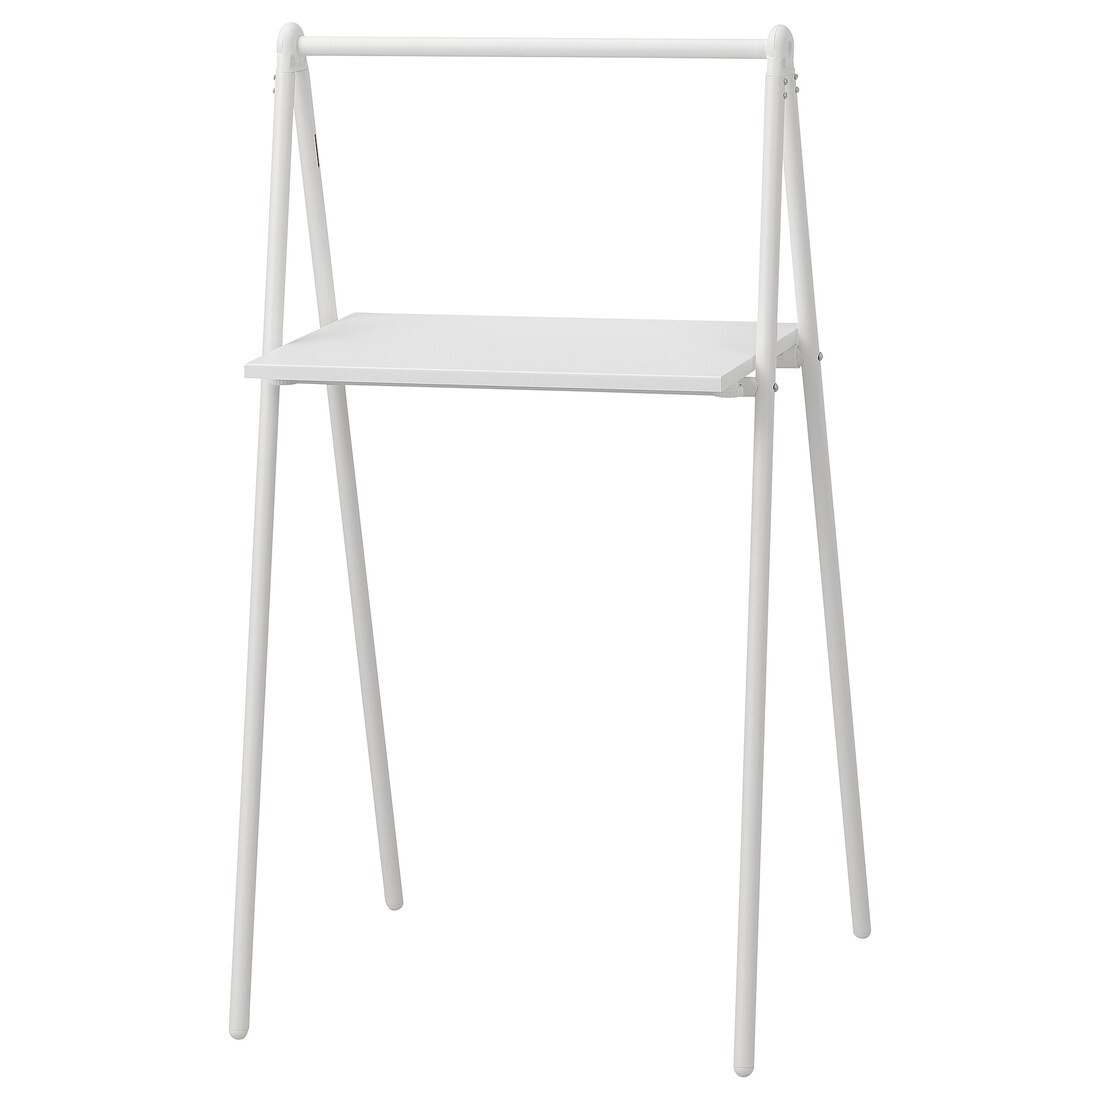 IKEA BJÖRKÅSEN БЬЁРКОСЕН Складной стол, белый, 59х35 см 60526405 605.264.05